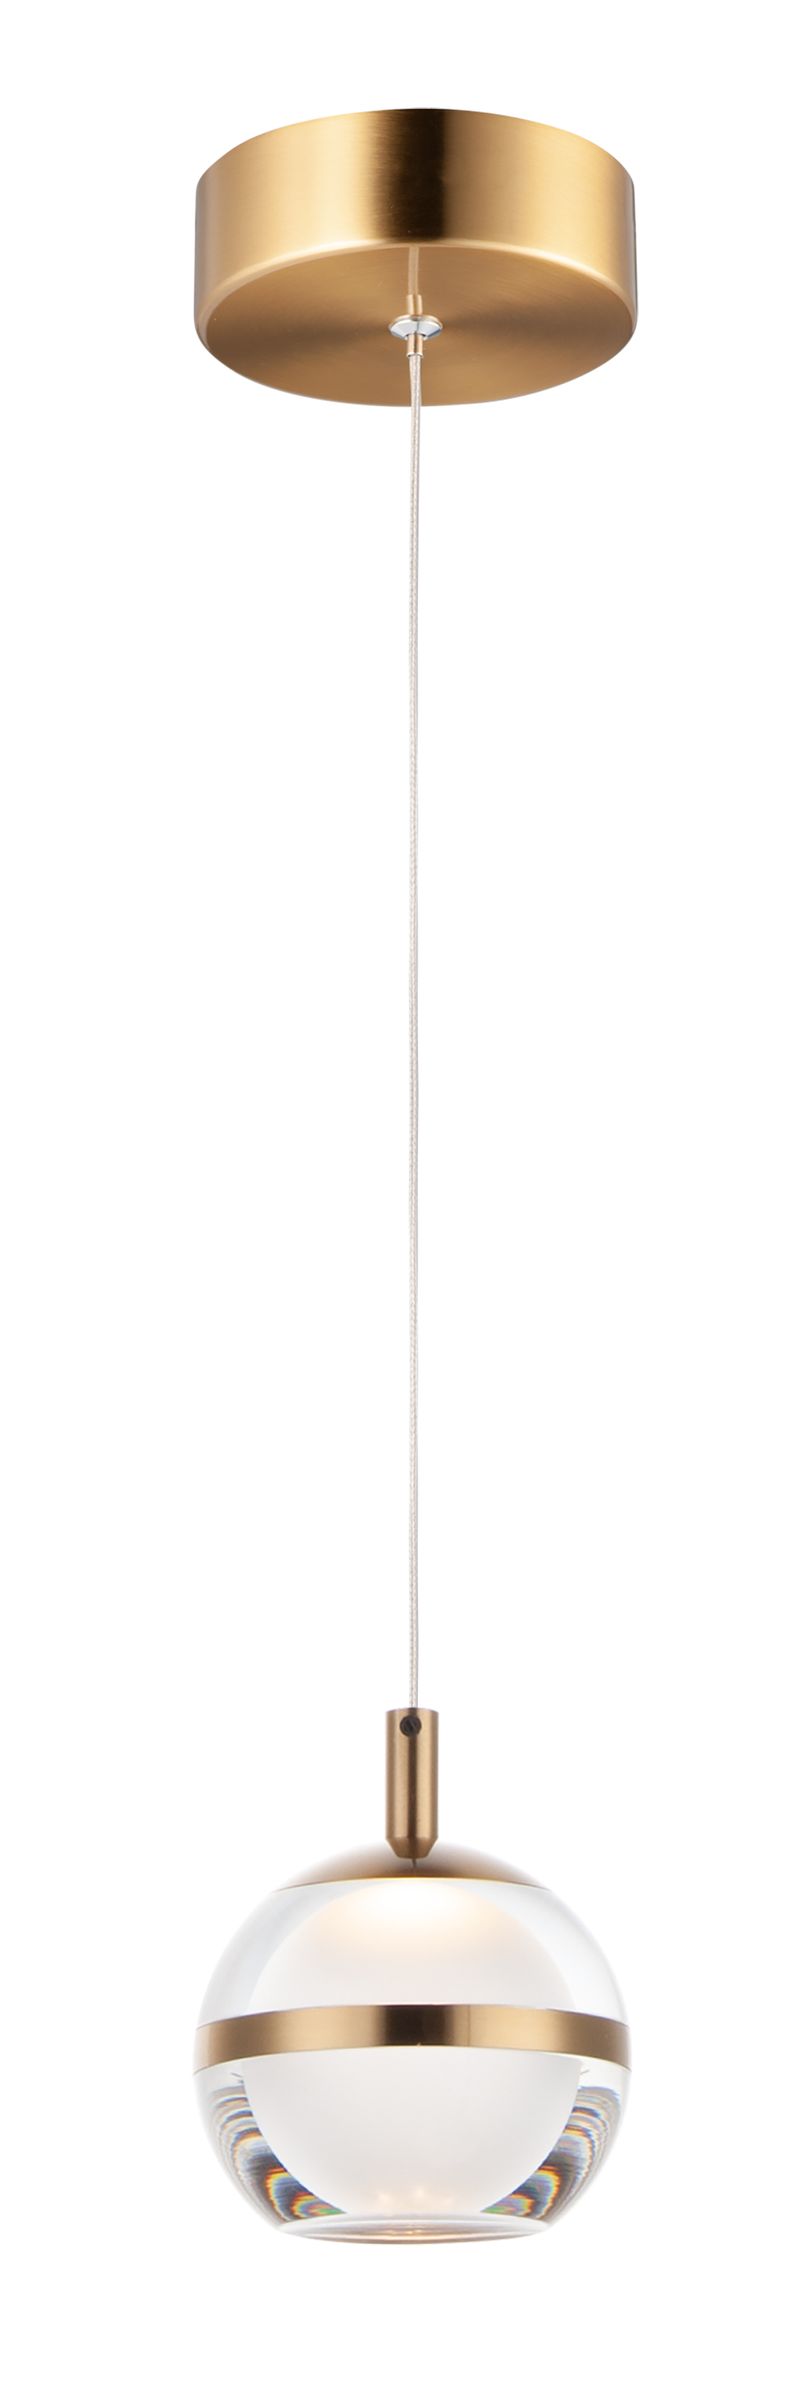 Swank 4.5' Single Light Pendant in Natural Aged Brass